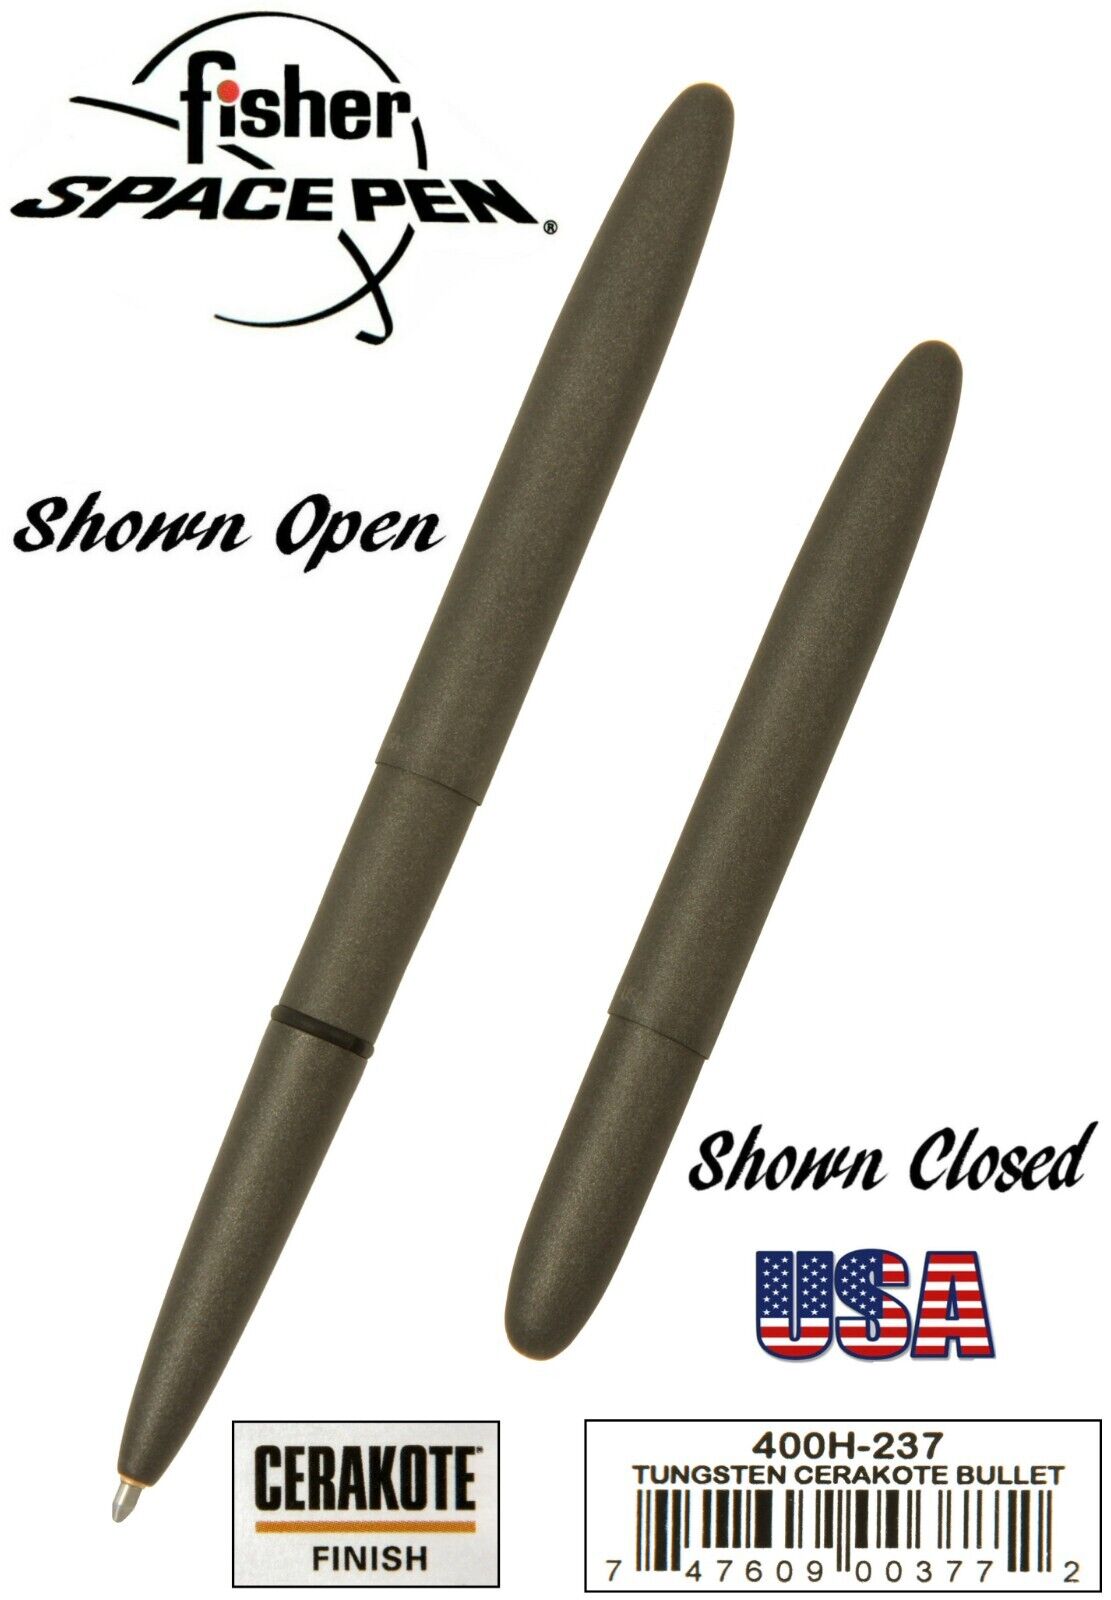 Fisher Space Pen #400H-237 / Tungsten Cerakote Bullet Space Pen